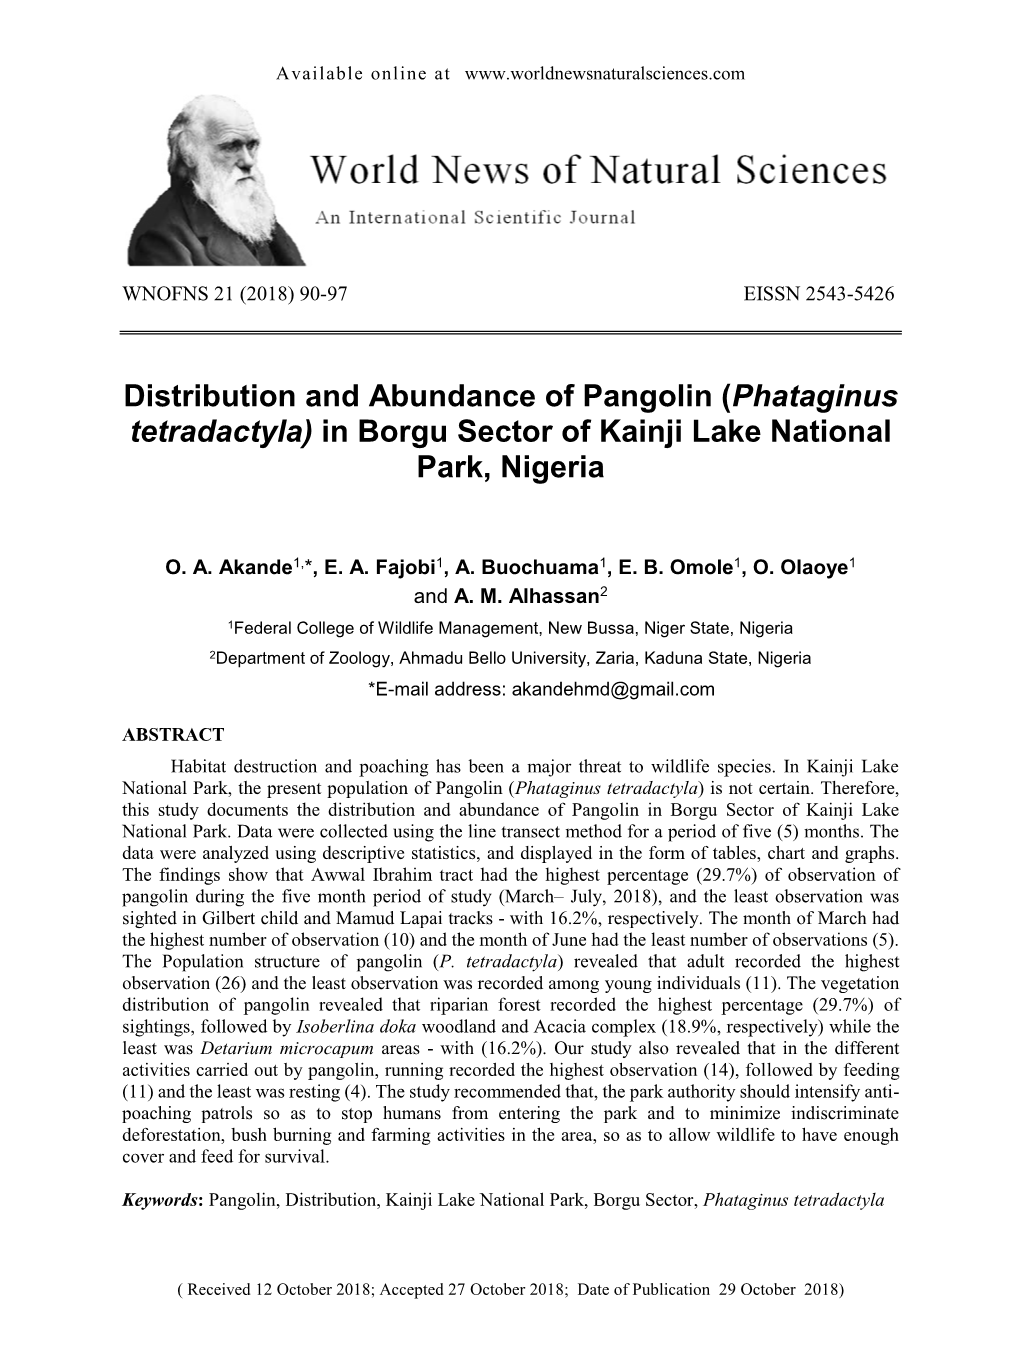 Distribution and Abundance of Pangolin (Phataginus Tetradactyla) in Borgu Sector of Kainji Lake National Park, Nigeria